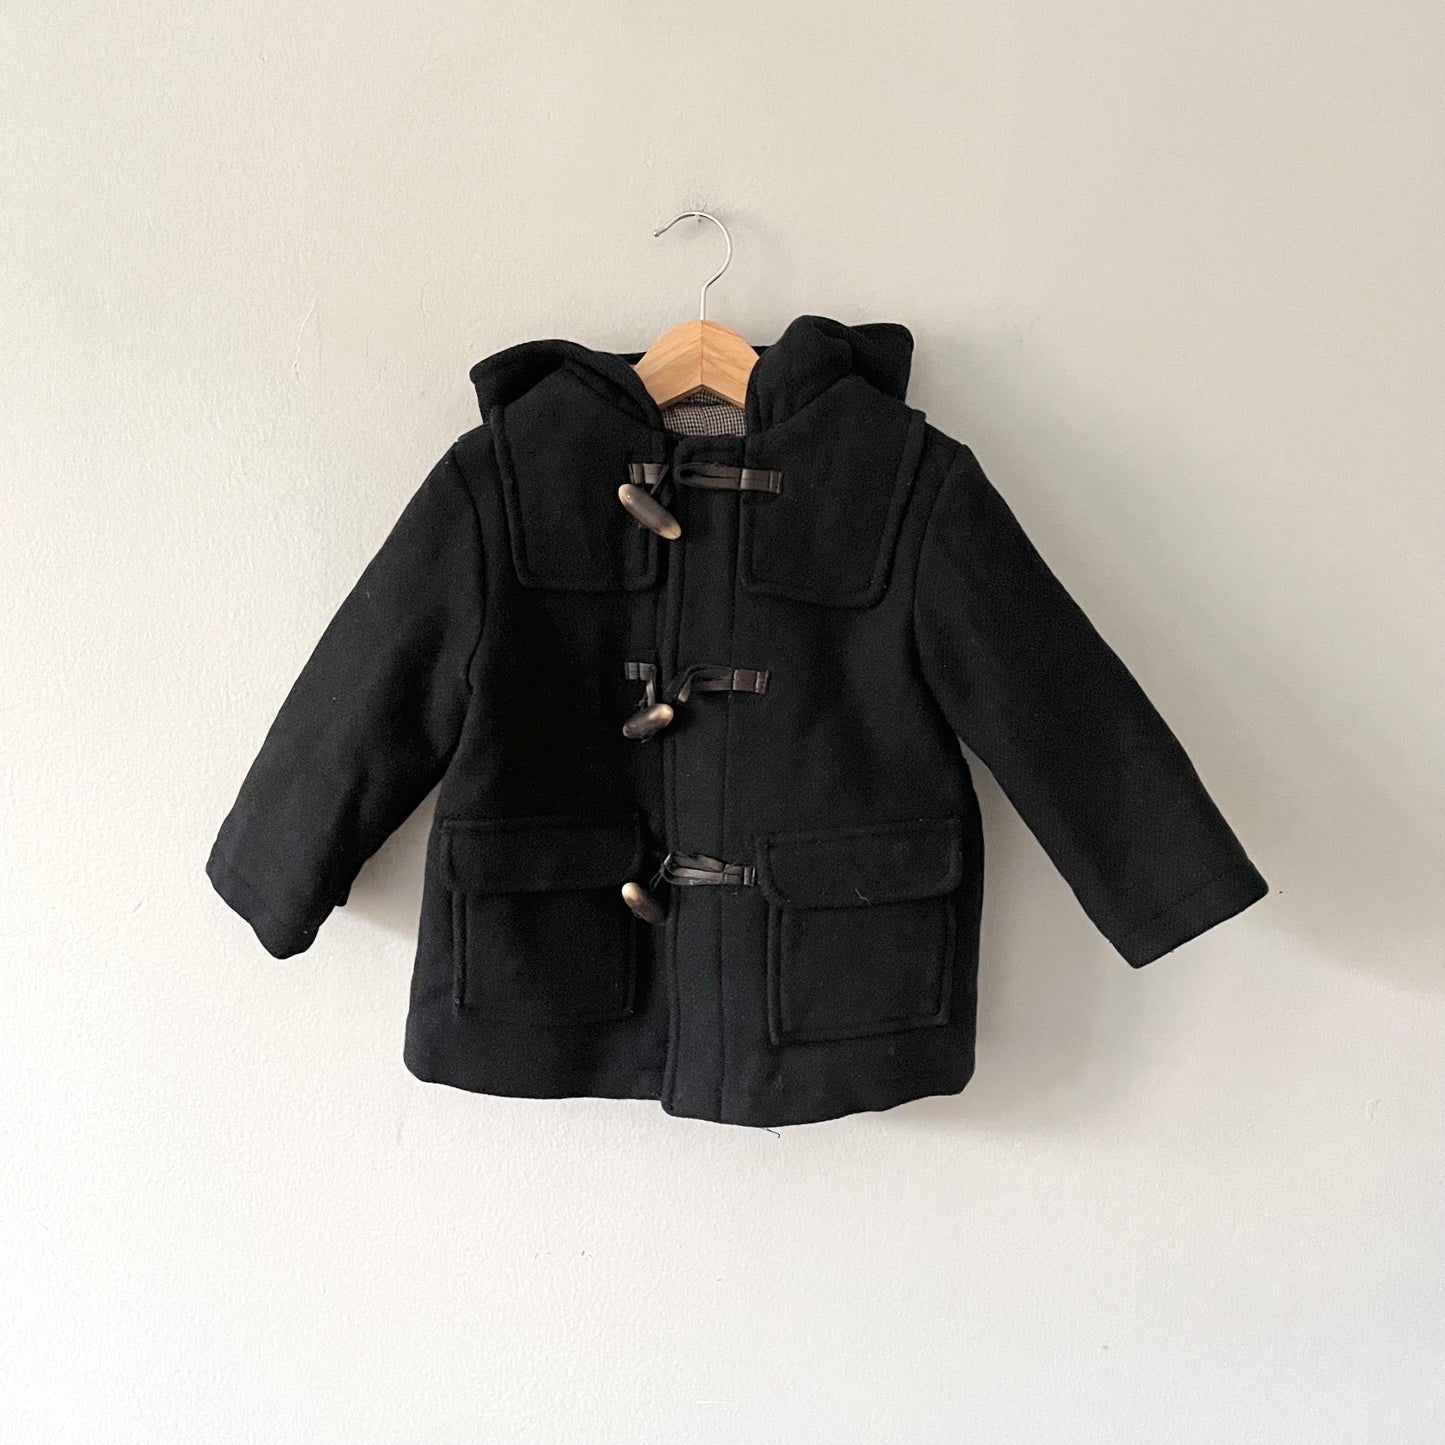 Zara / Navy wool mix duffle coat / 18-24M